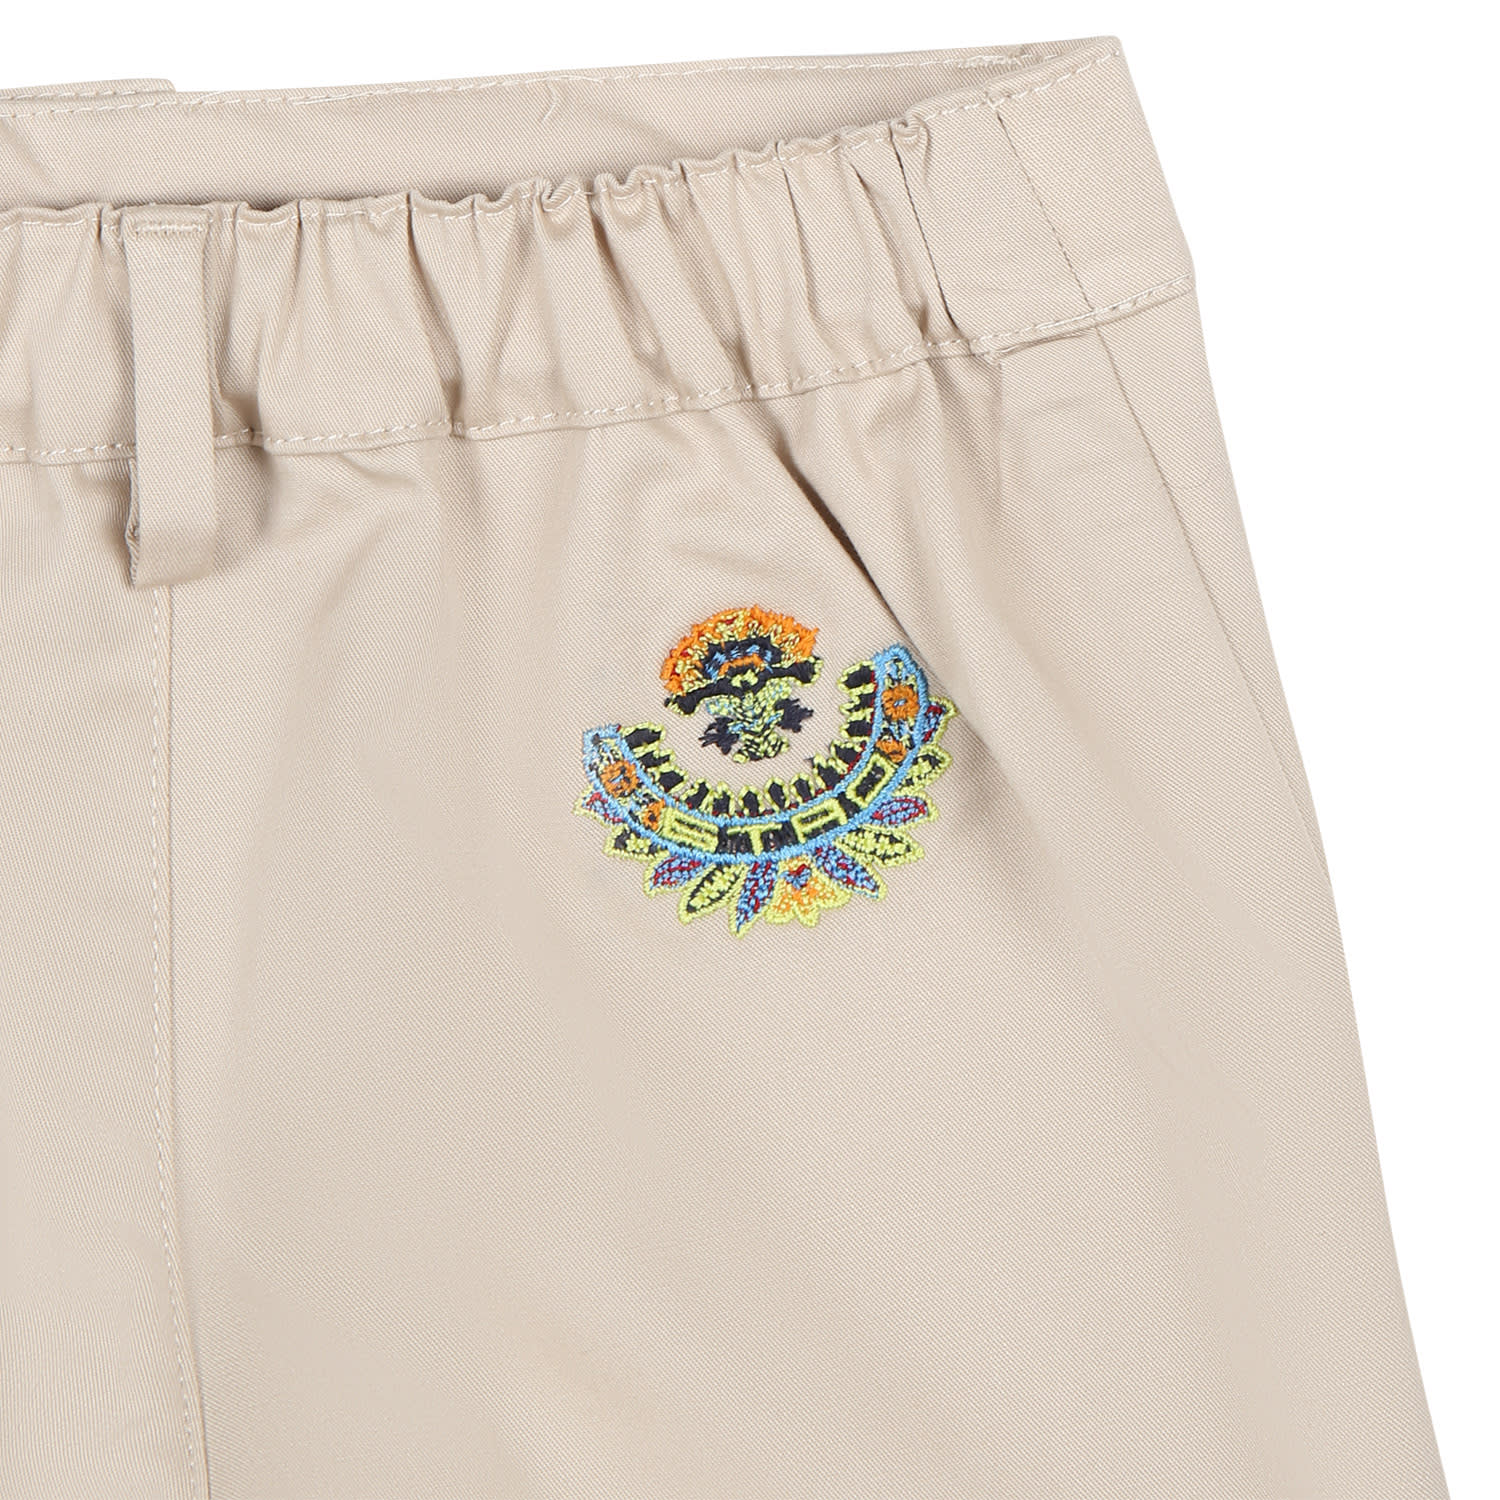 Shop Etro Elegant Beige Shorts For Baby Boy